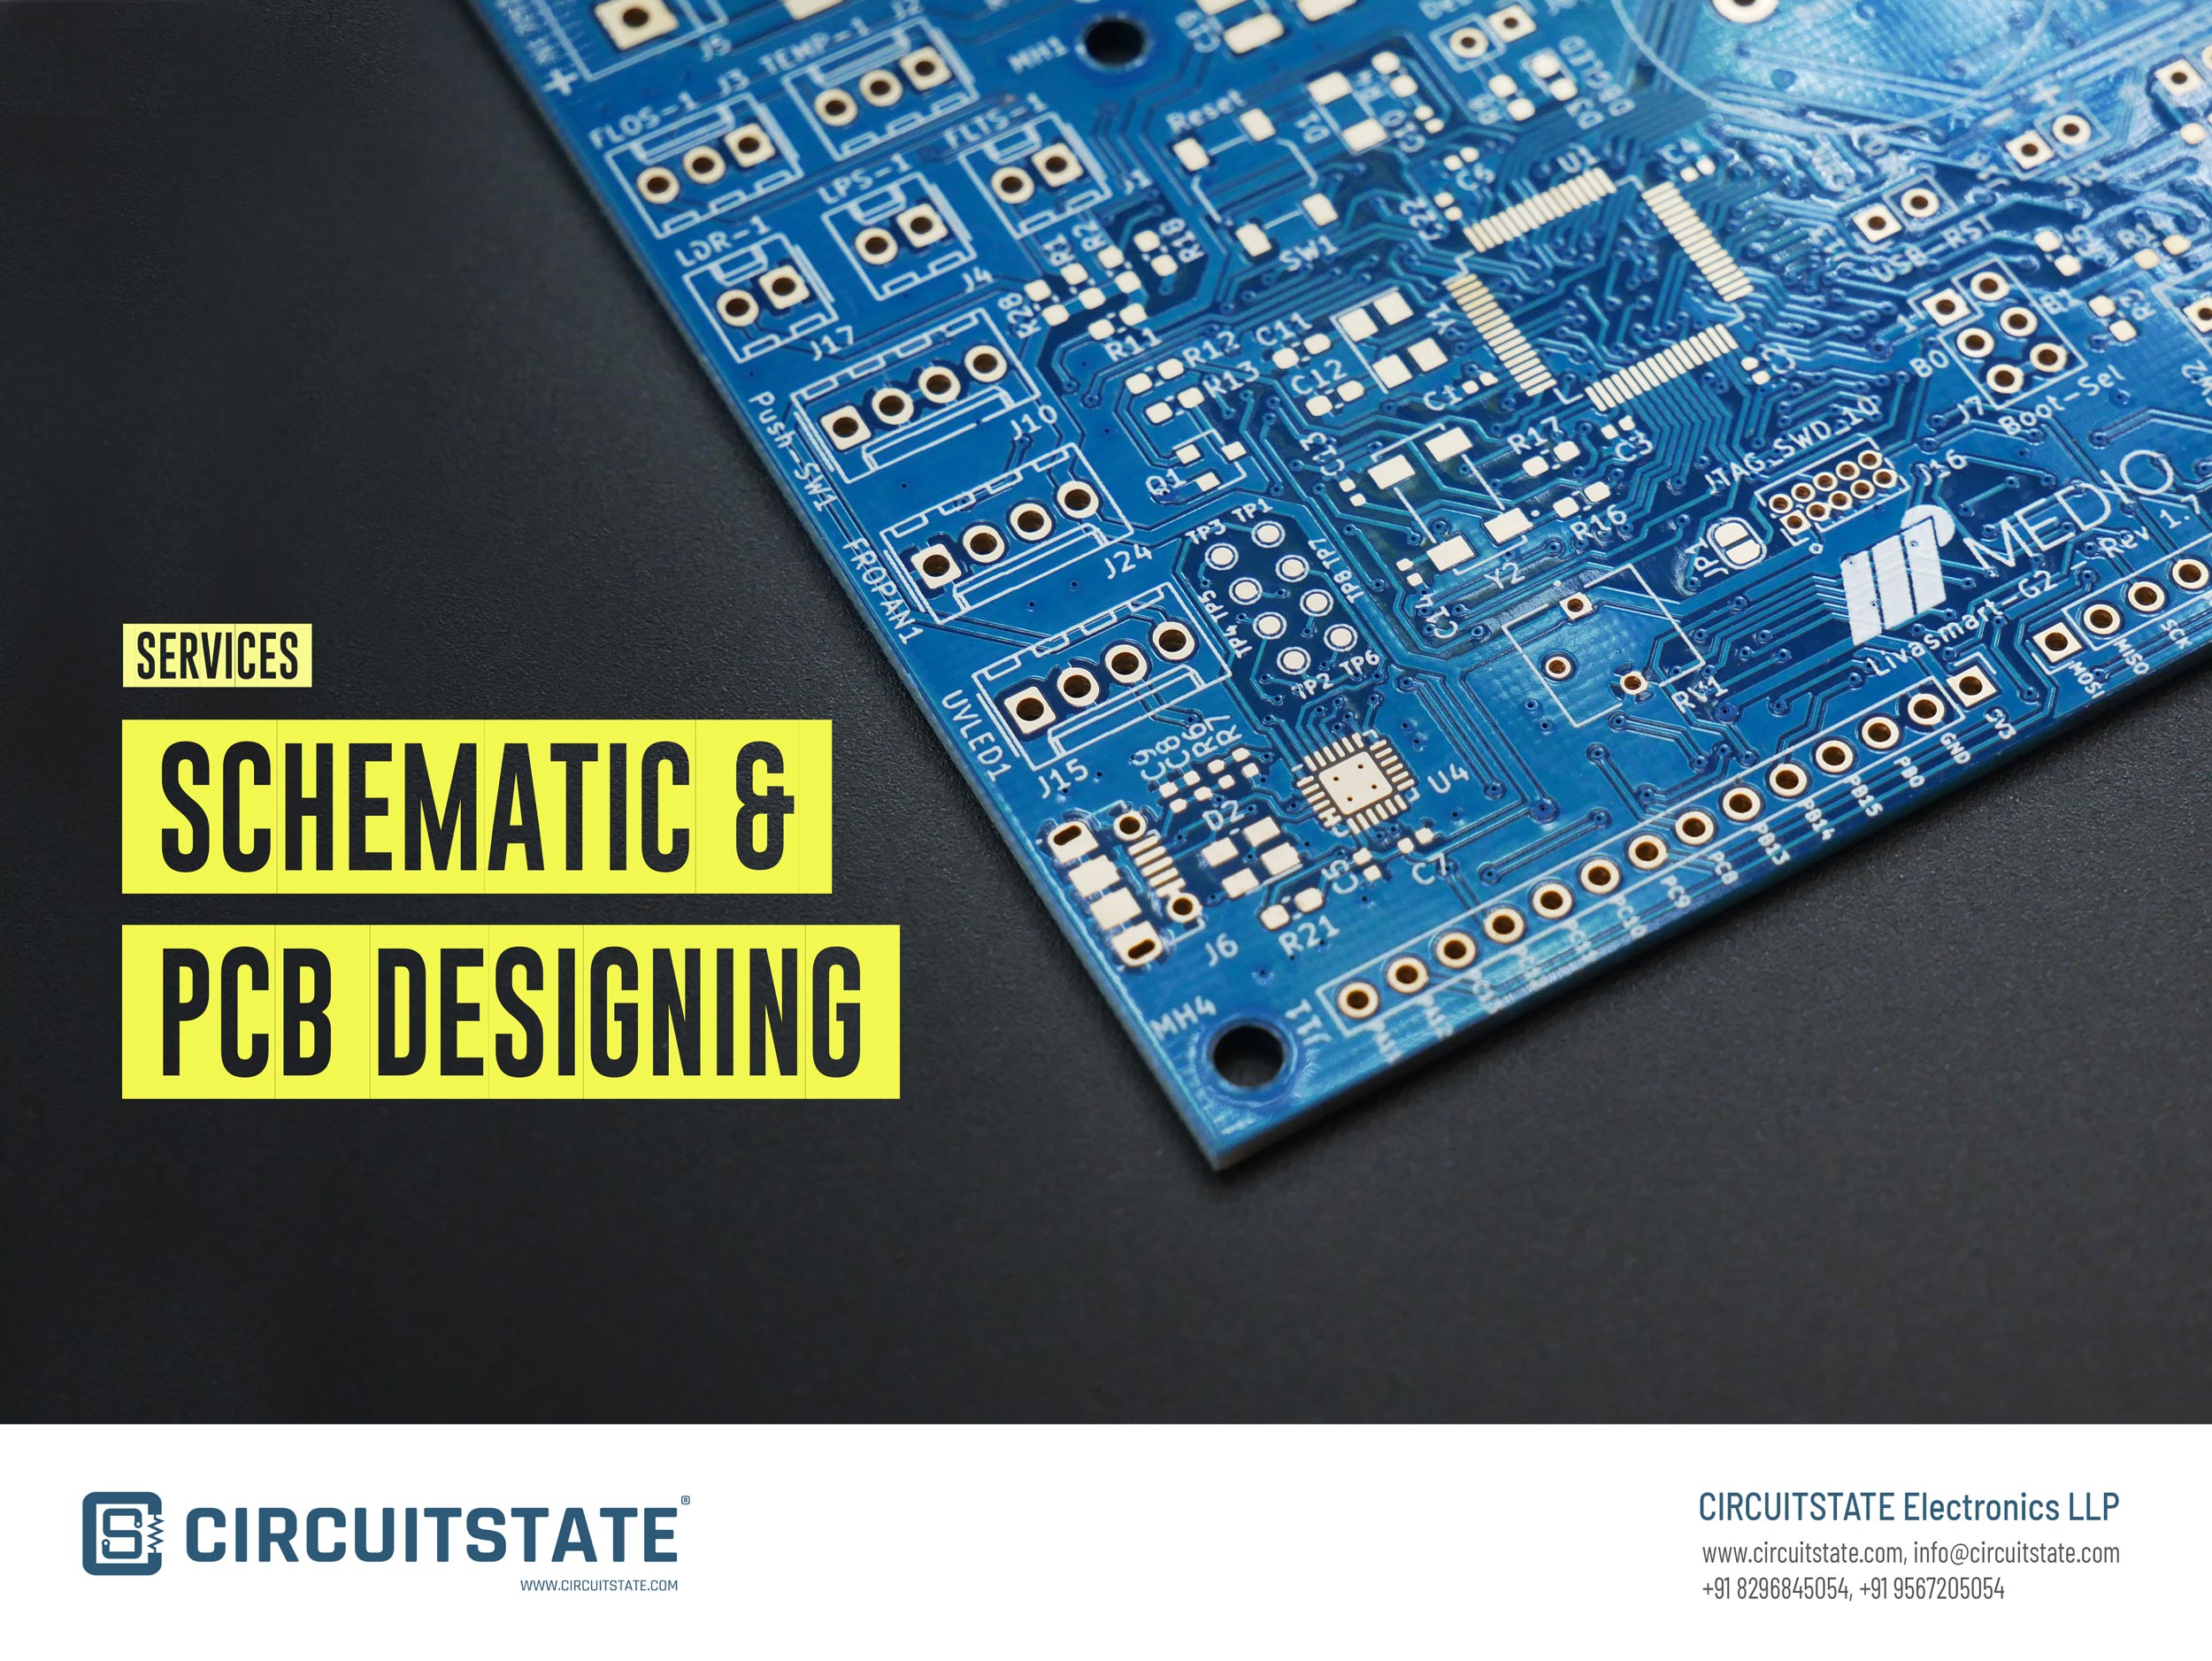 Printed Circuit Board (PCB) Design Service - CIRCUITSTATE Electronics